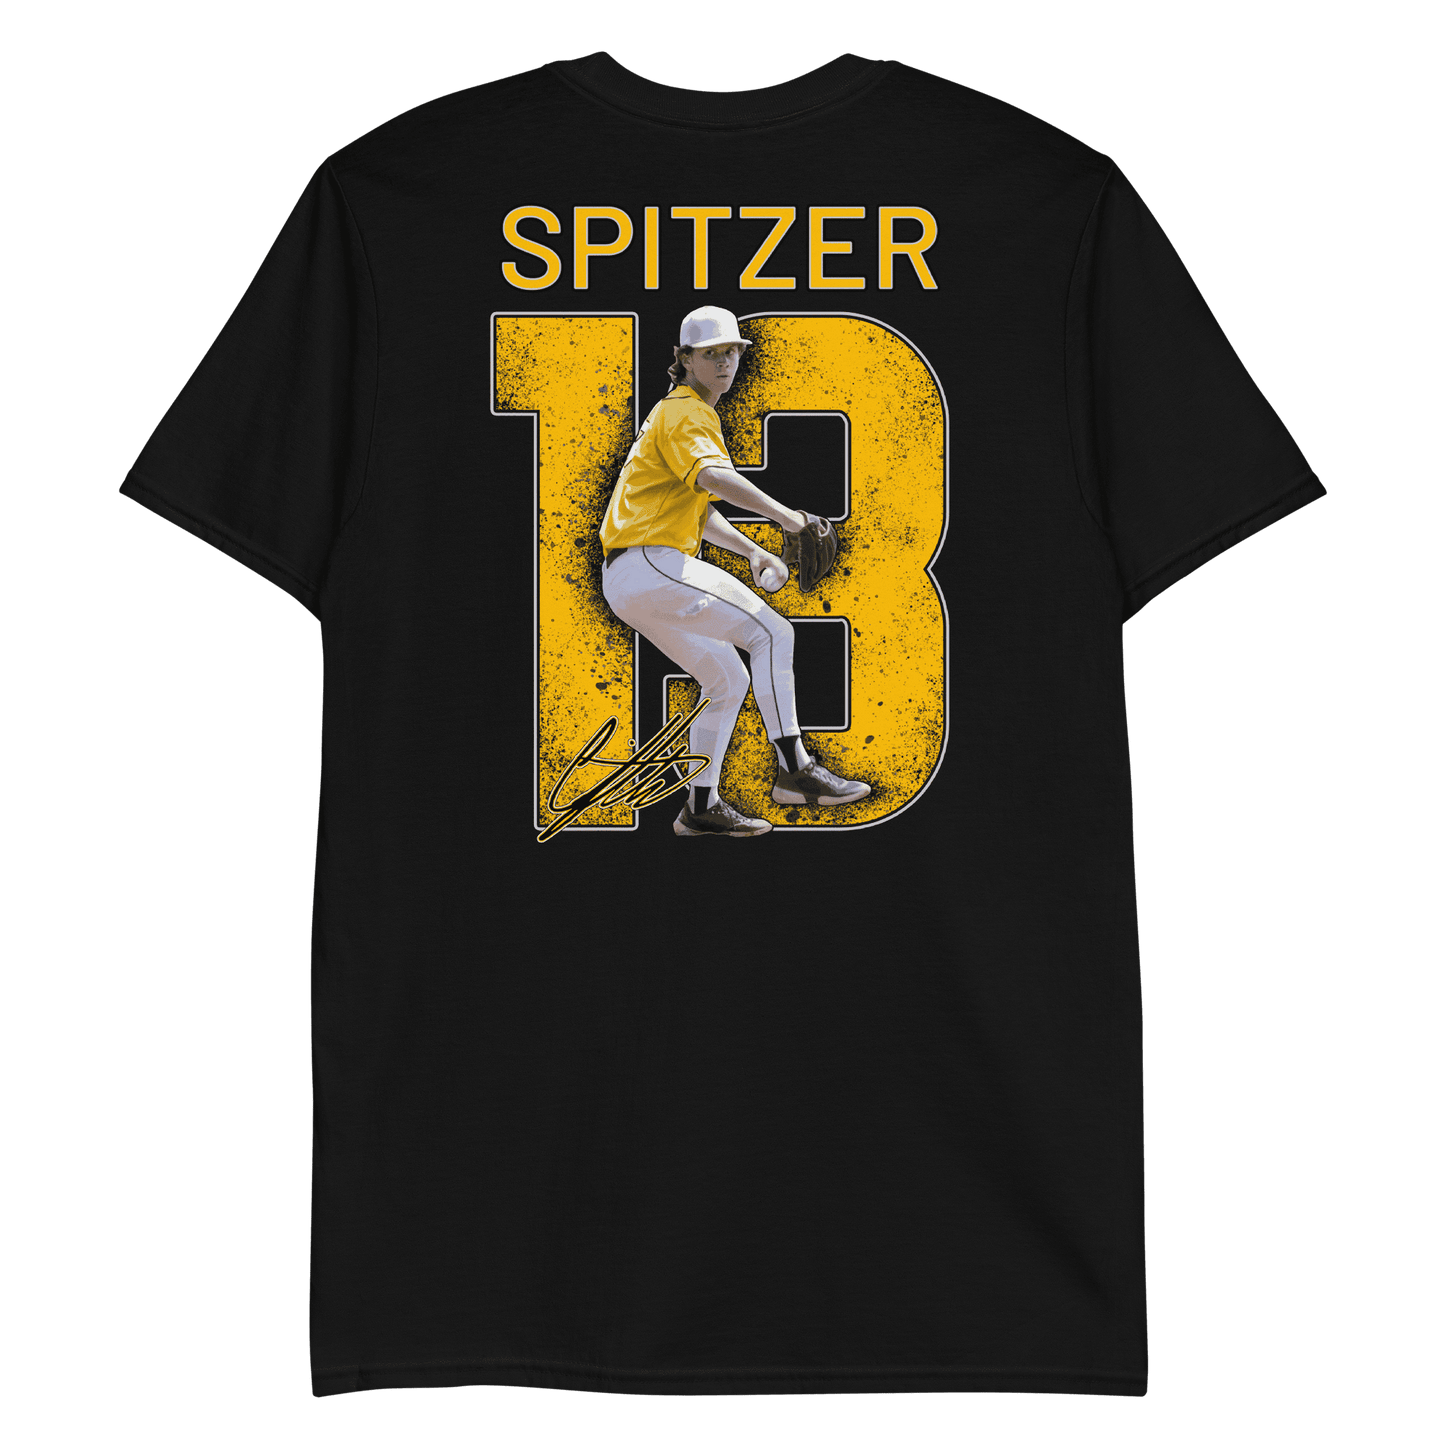 Cole Spitzer | Mural & Patch T-shirt - Clutch -